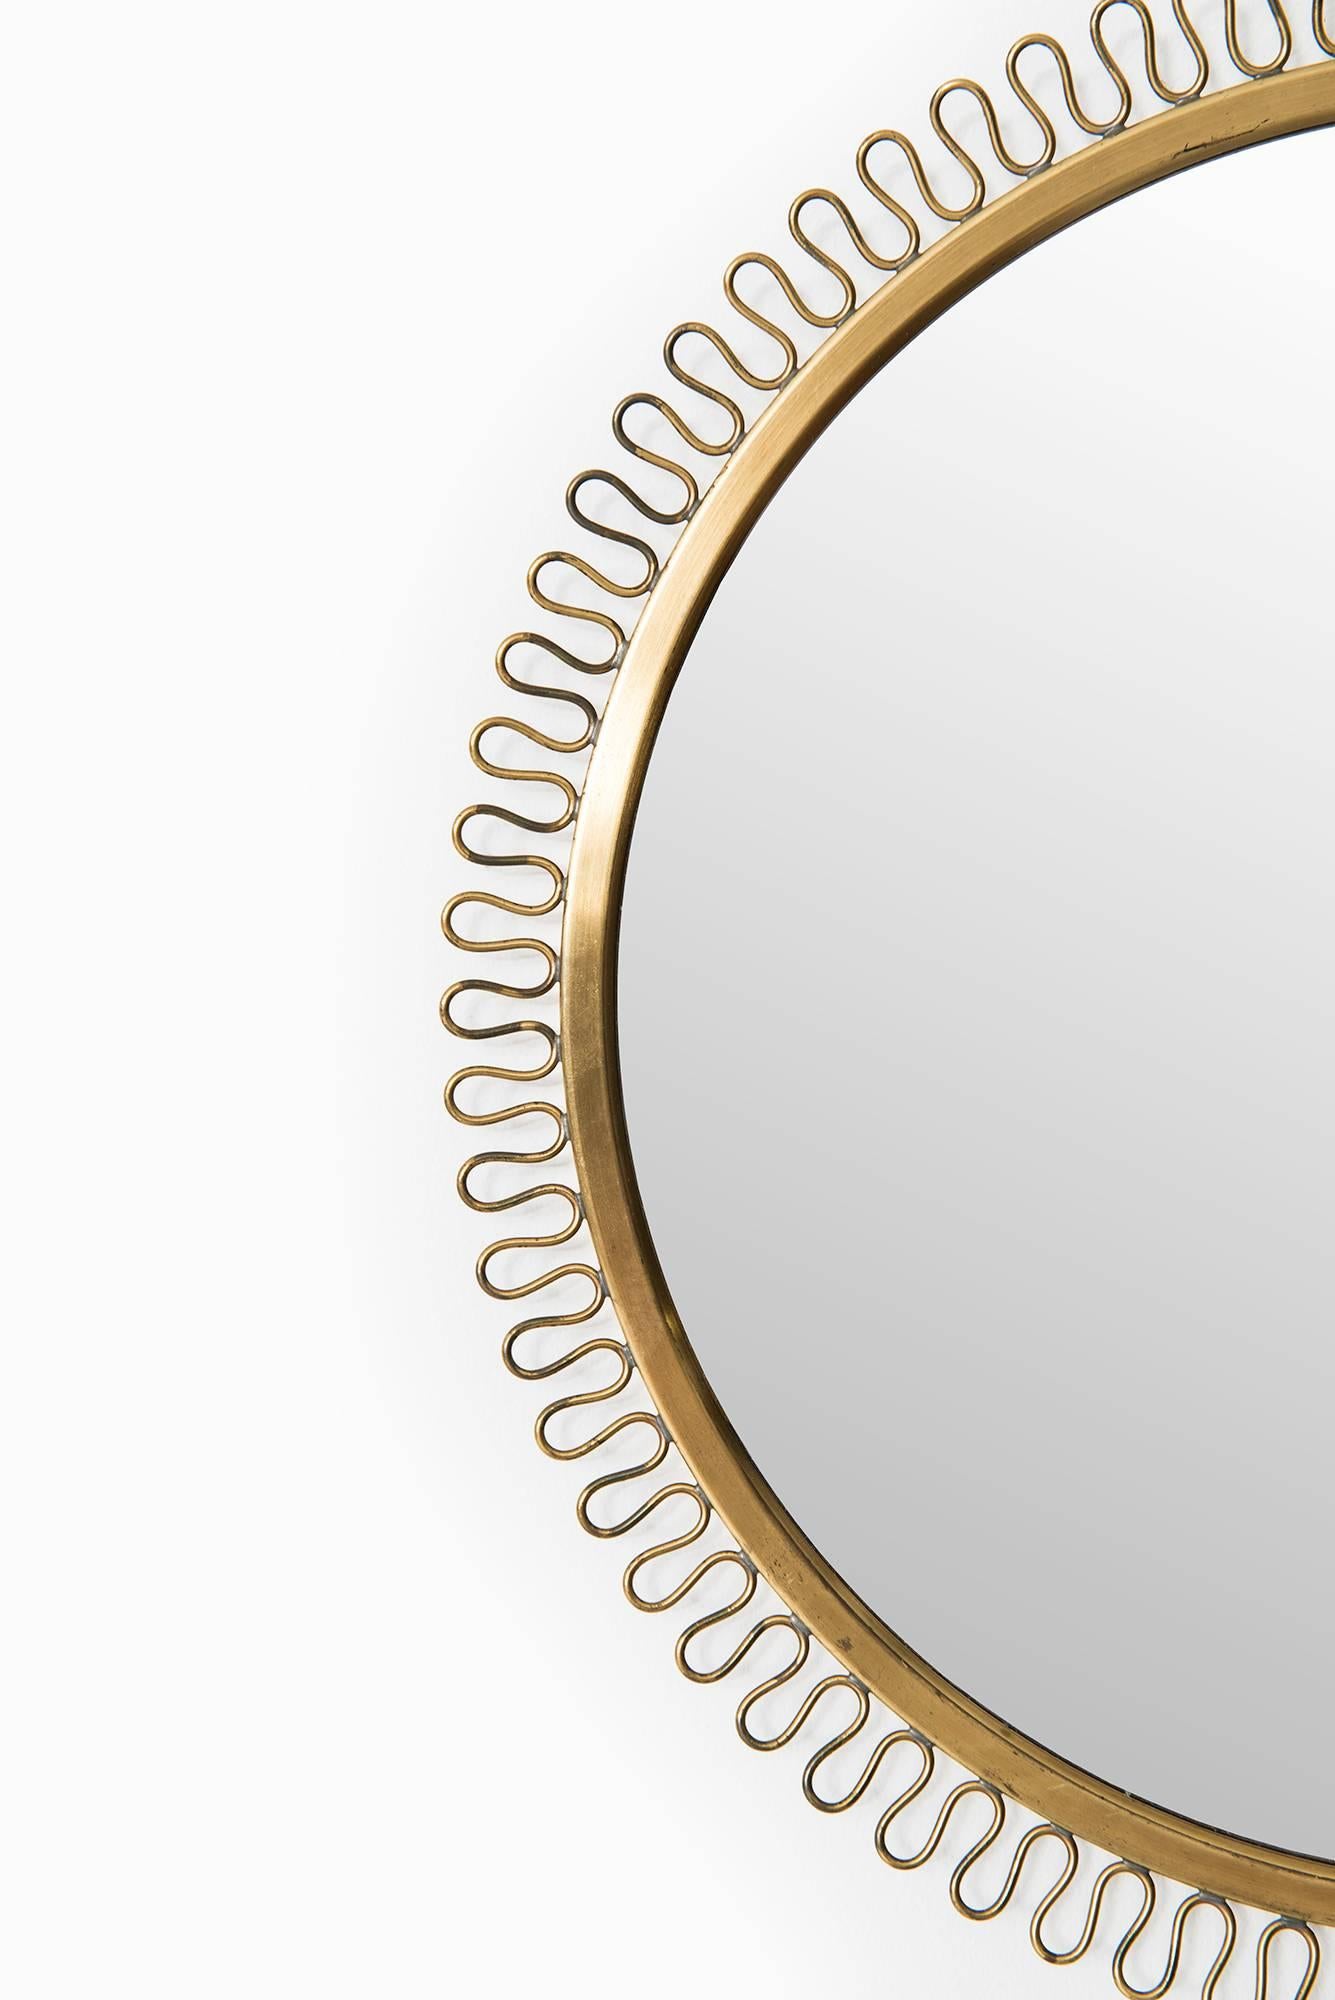 Round mirror in brass designed by Josef Frank. Produced by Svenskt Tenn in Sweden.